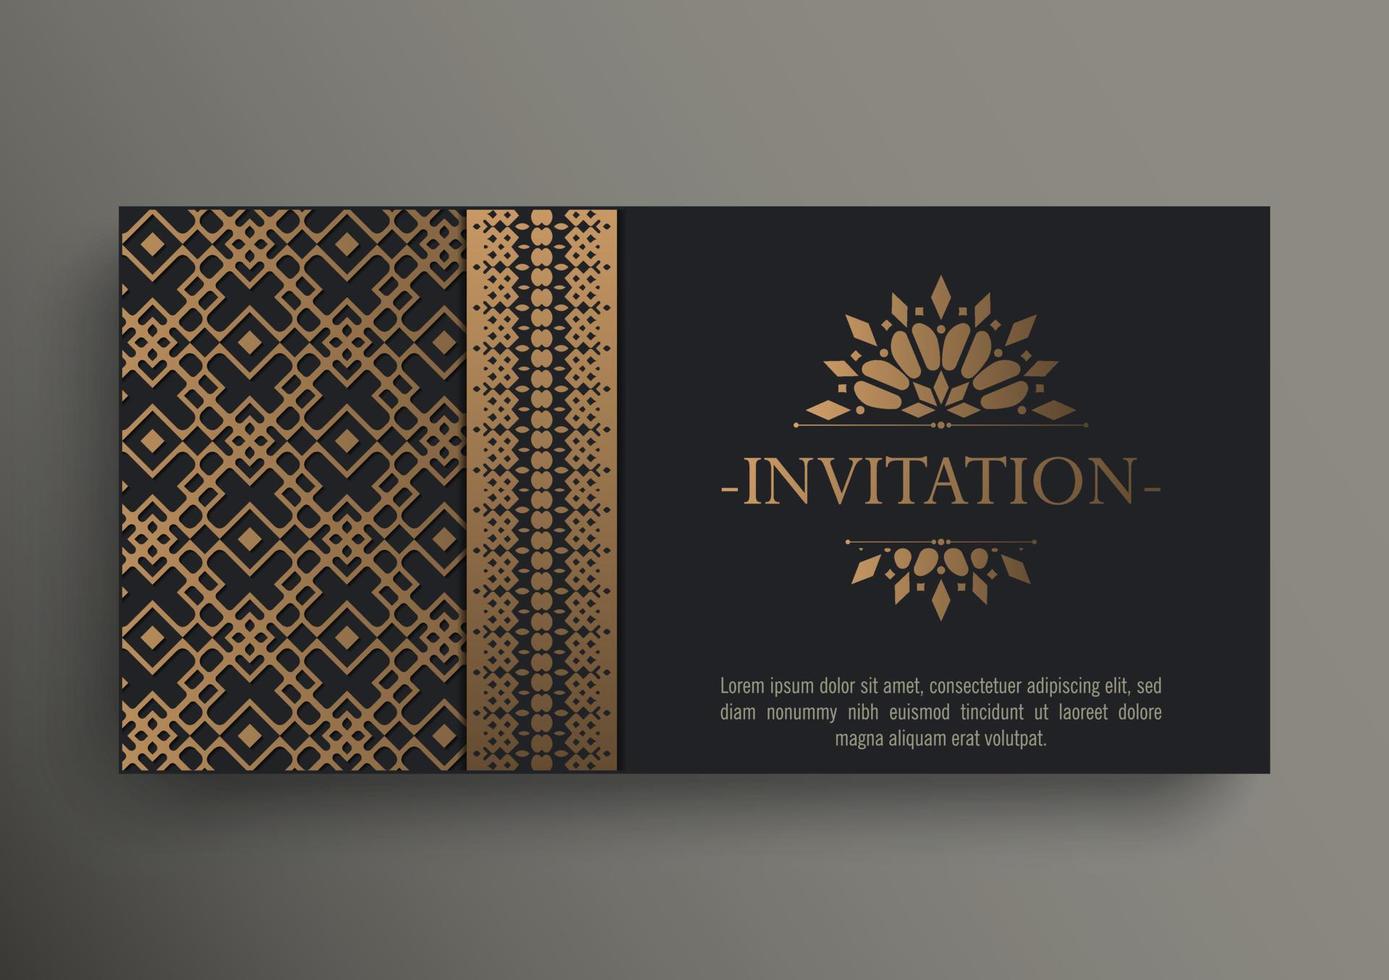 luxury invitation background style ornamental pattern vector